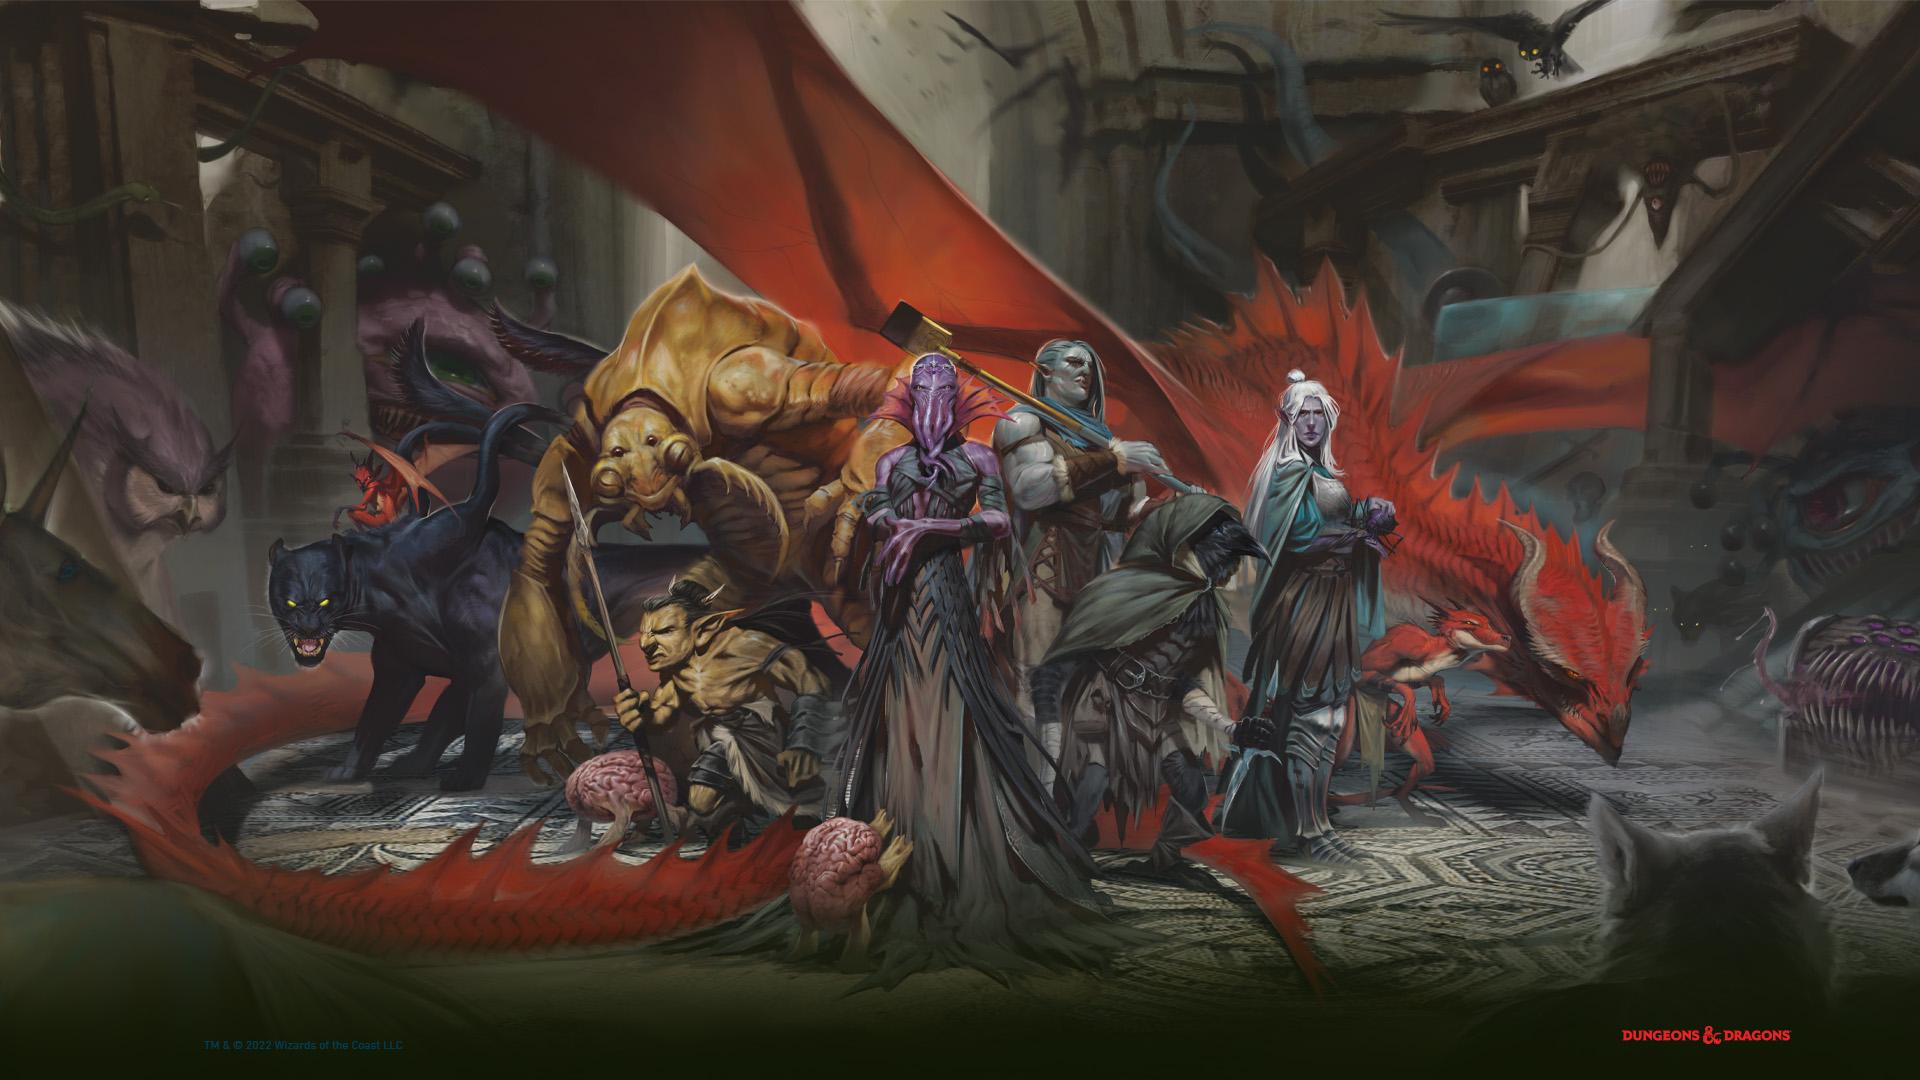 Baldur's Gate 3 and D&D image - A group of villains cluster together